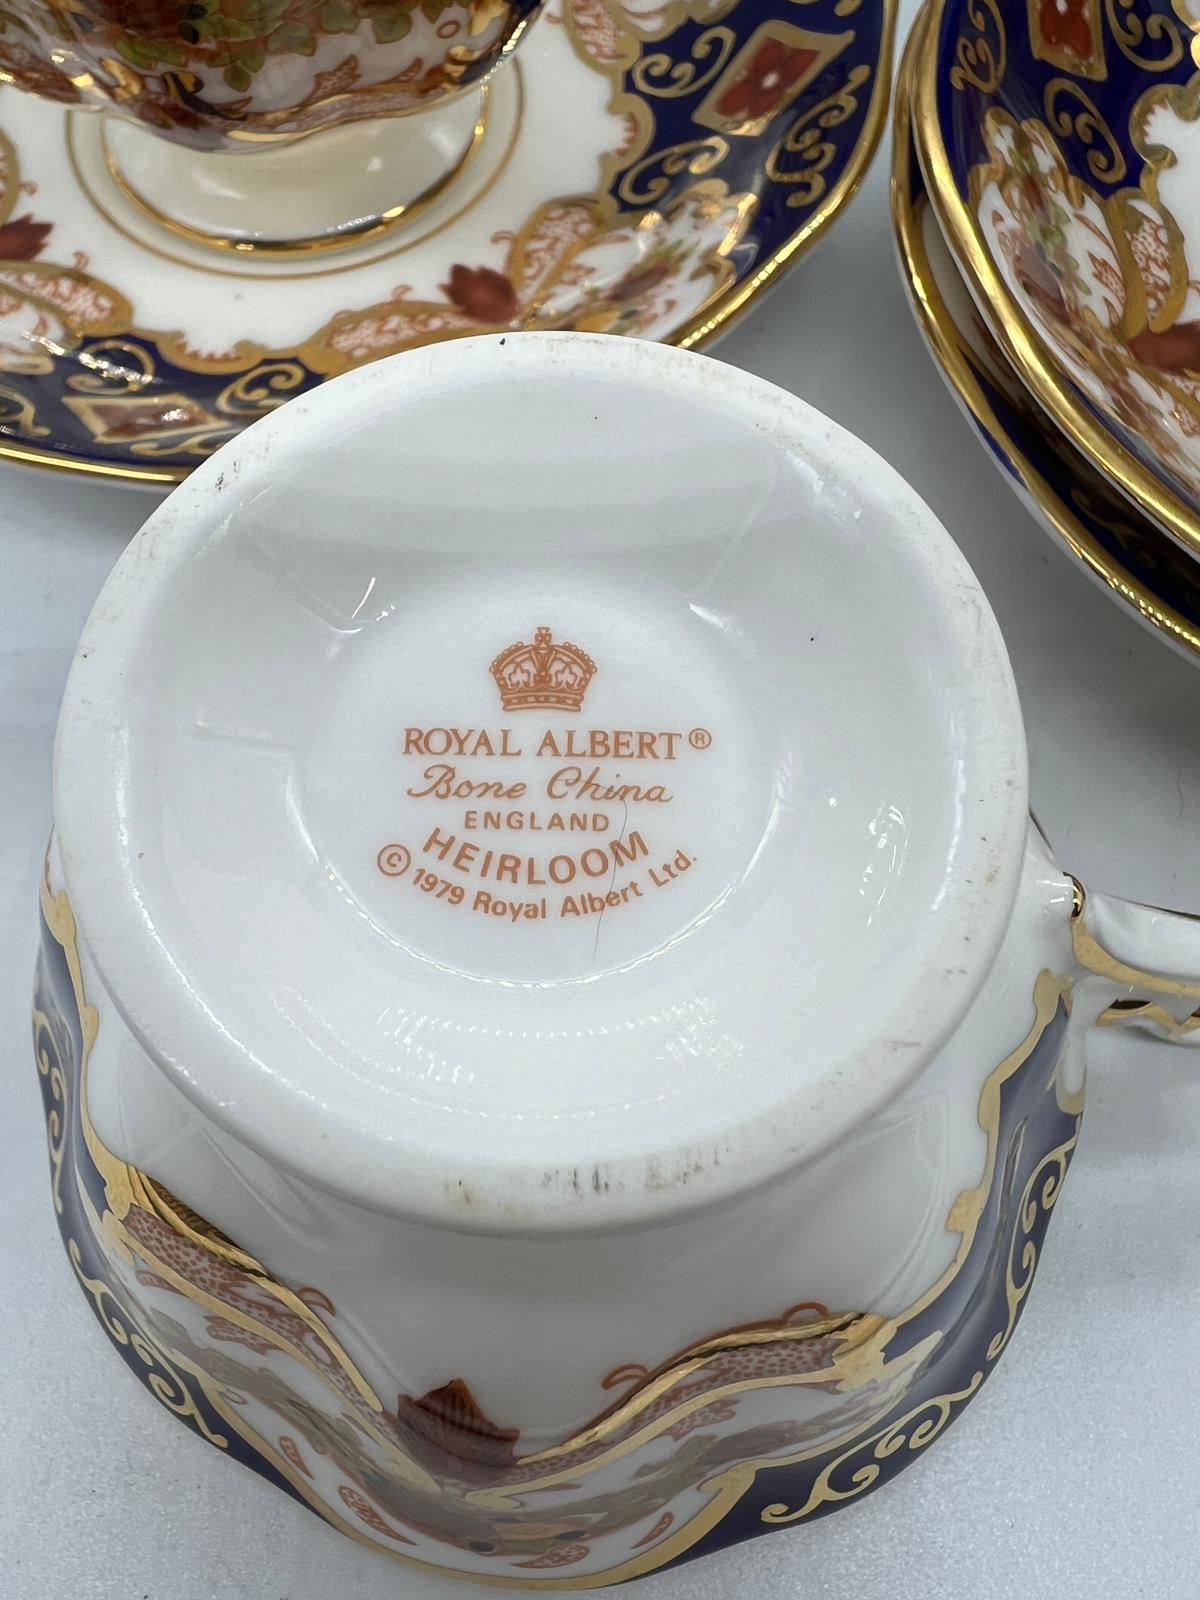 Royal Albert bone china "Heirloom" part tea service - Image 3 of 5